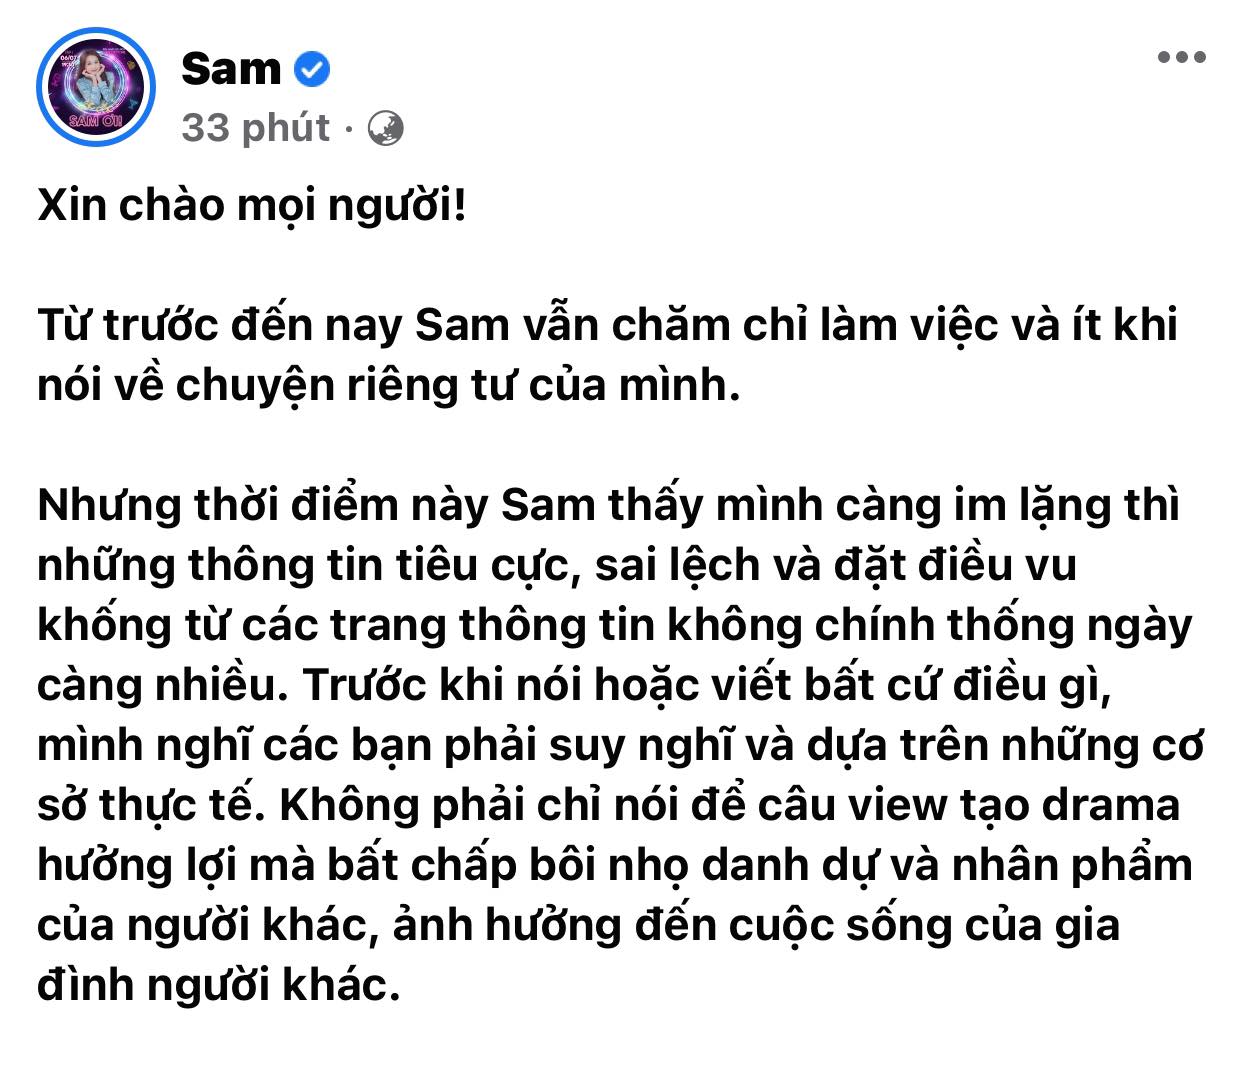 Nong-sam-chinh-thuc-len-tieng-noi-ro-moi-quan-he-voi-ong-trum-showbiz-viet-va-tin-an-chan-tu-thien